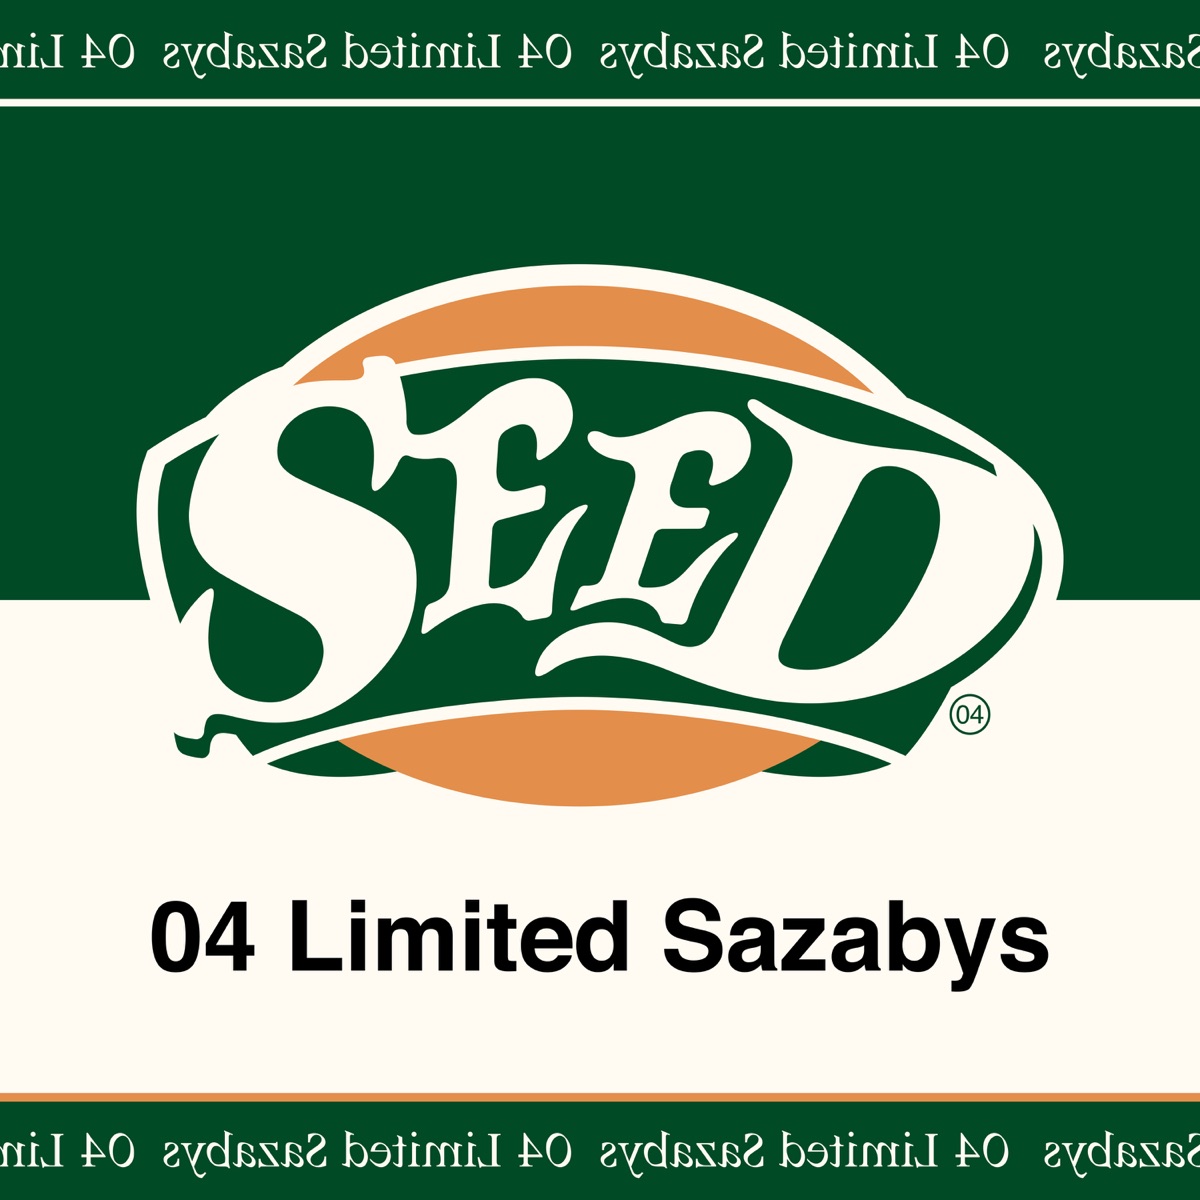 『04 Limited Sazabys - Puzzle 歌詞』収録の『SEED』ジャケット